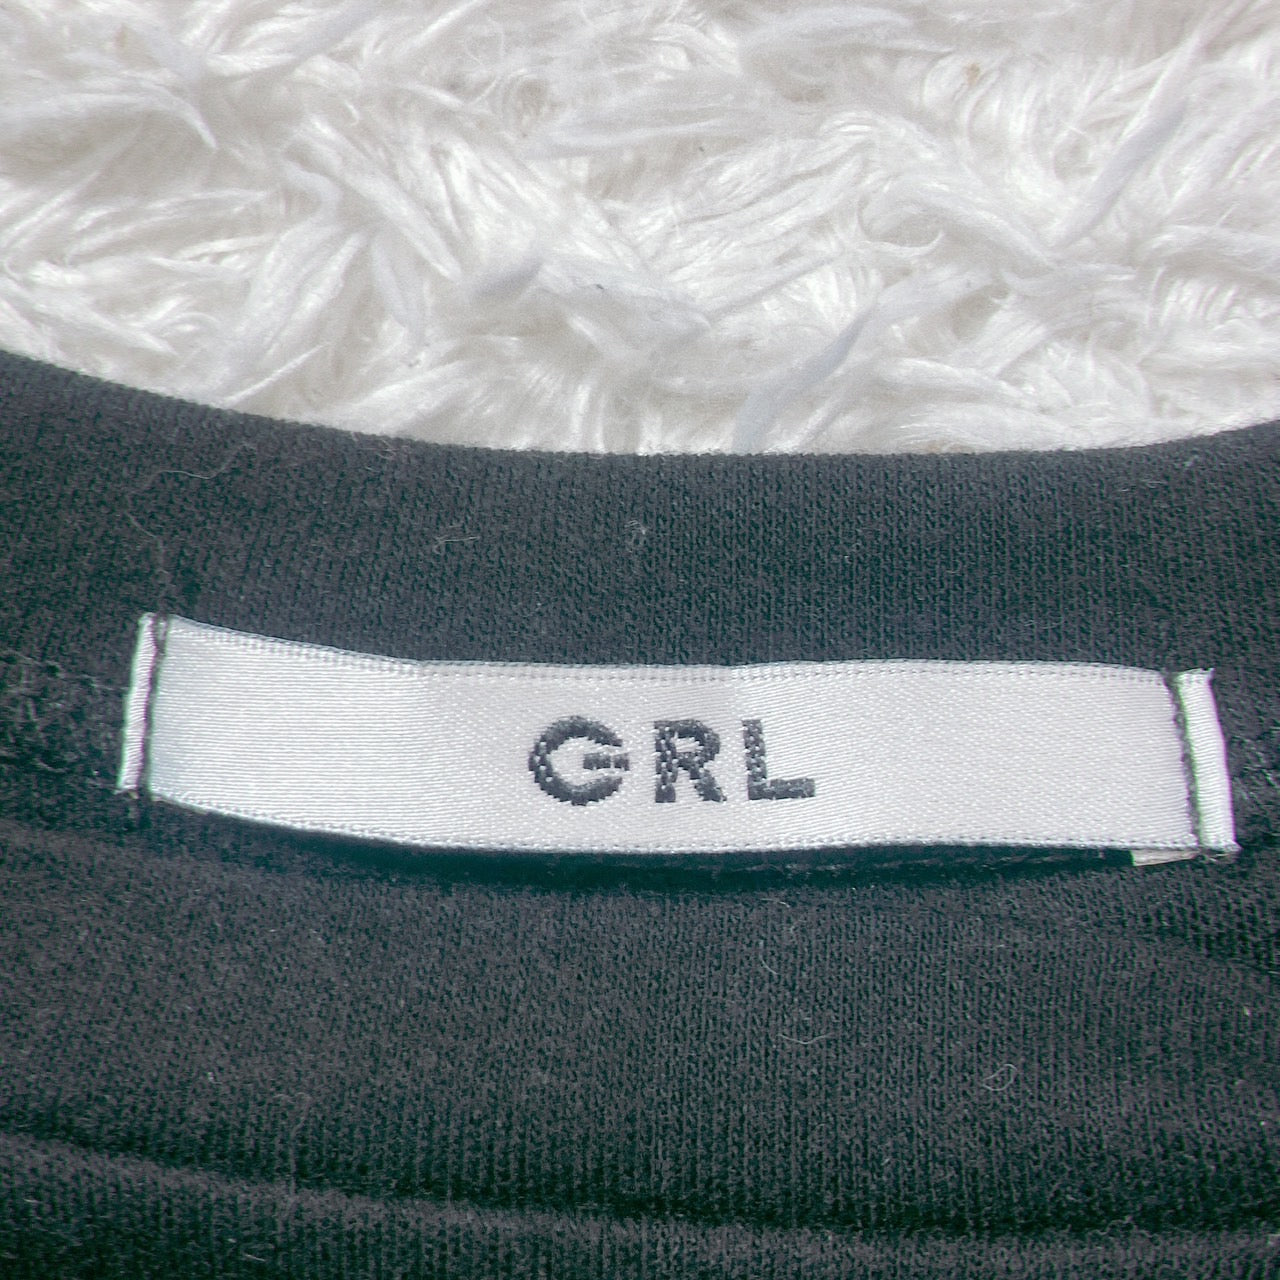 【27655】 GRL グレイル ノースリーブシャツ サイズL ブラック 袖なし 丸首 プリント文字 カジュアル 薄手 シンプル 良品 レディース